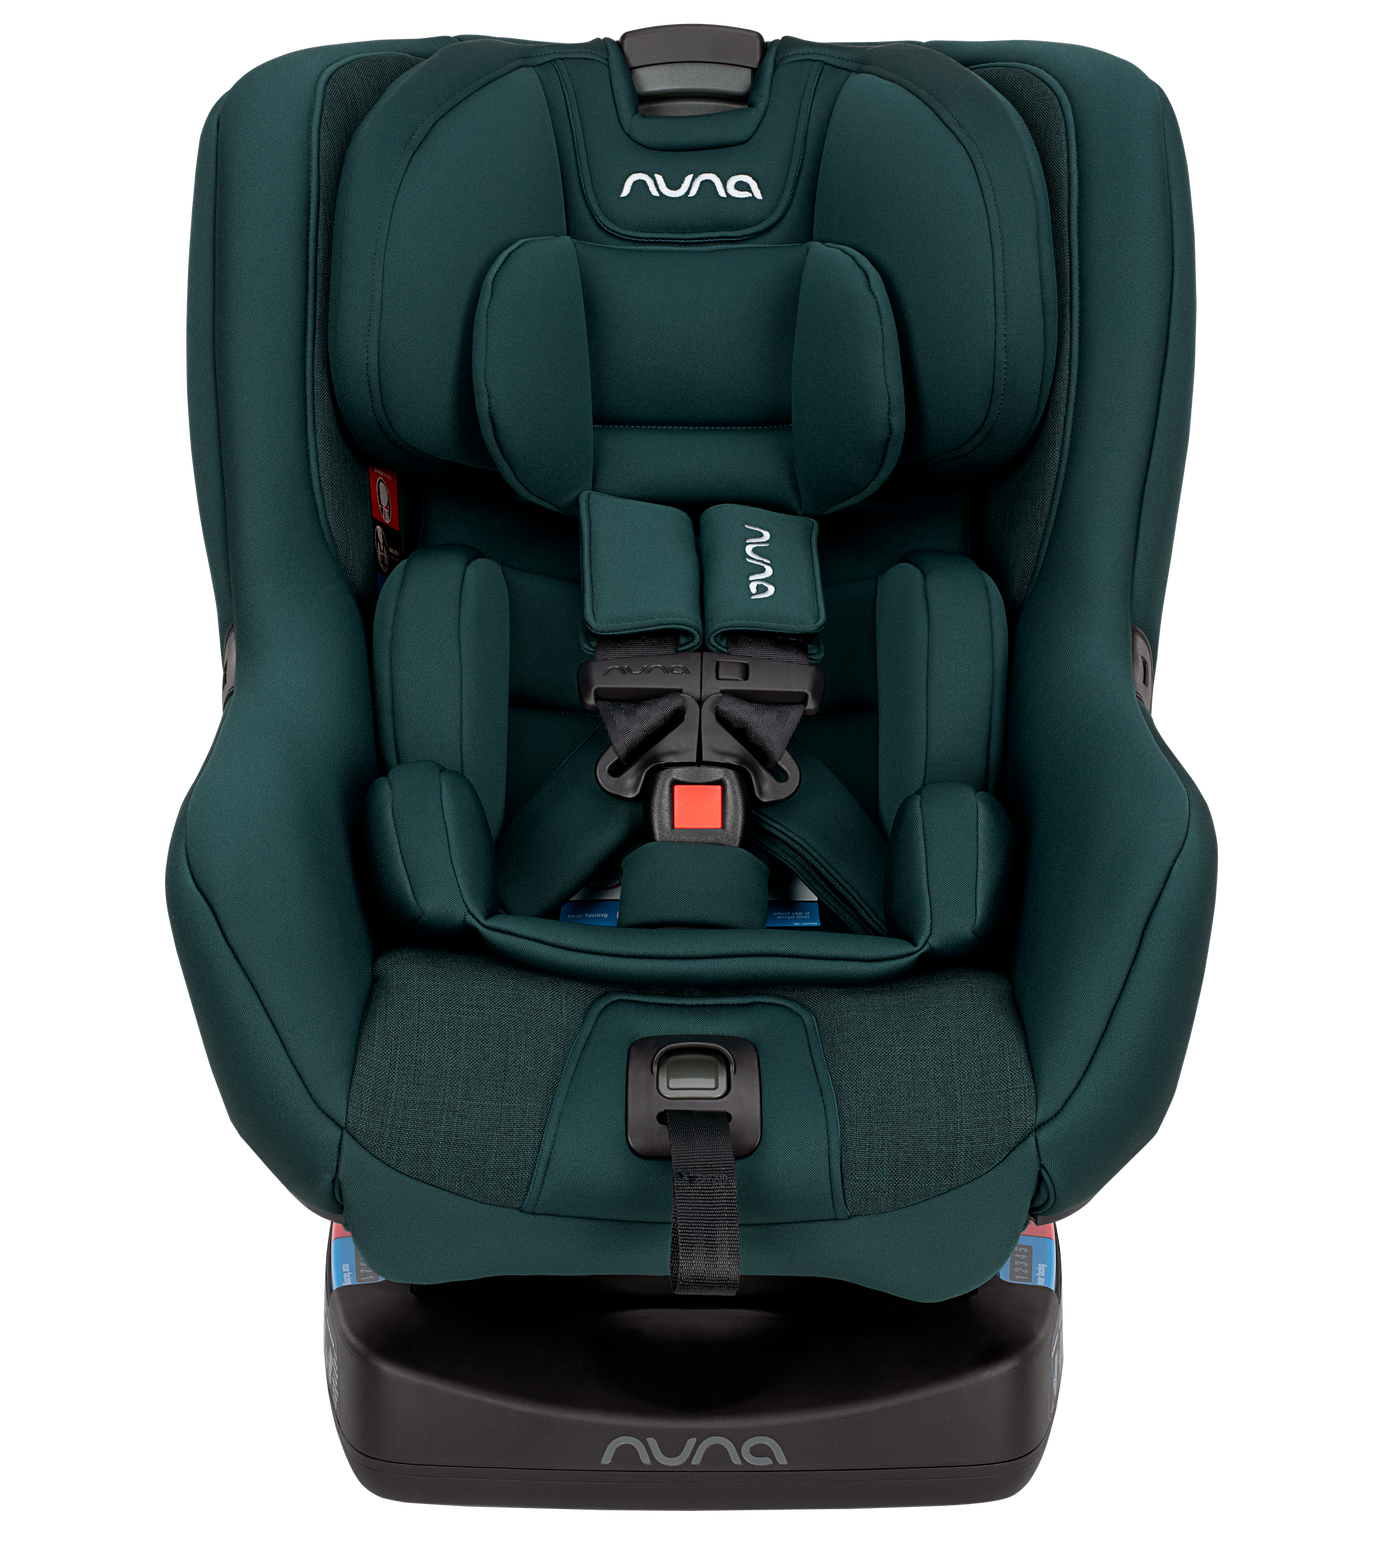 Nuna RAVA Convertible Car Seat